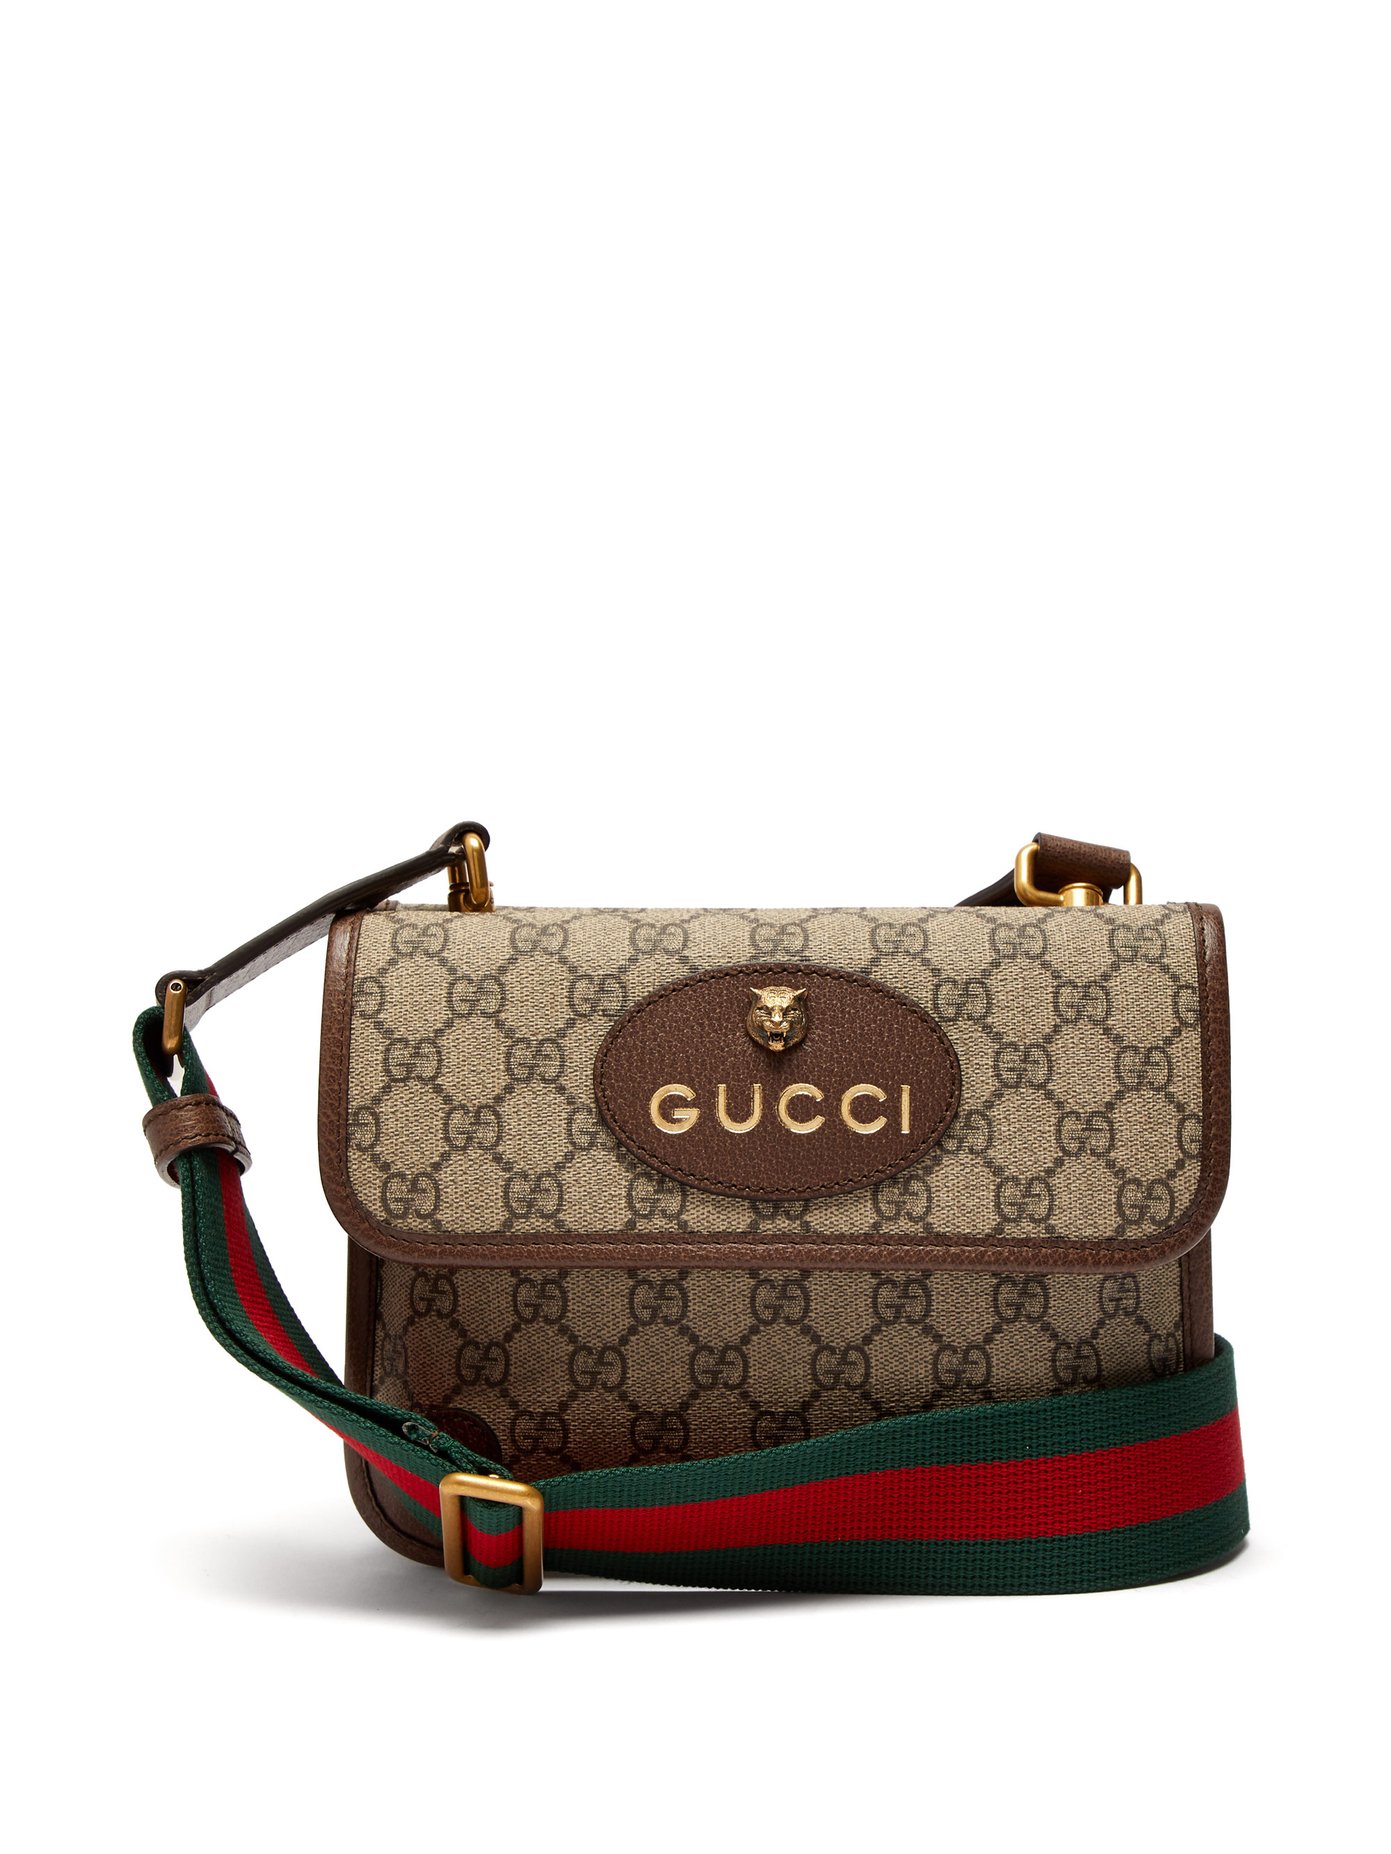 GG Supreme canvas messenger bag | Gucci 